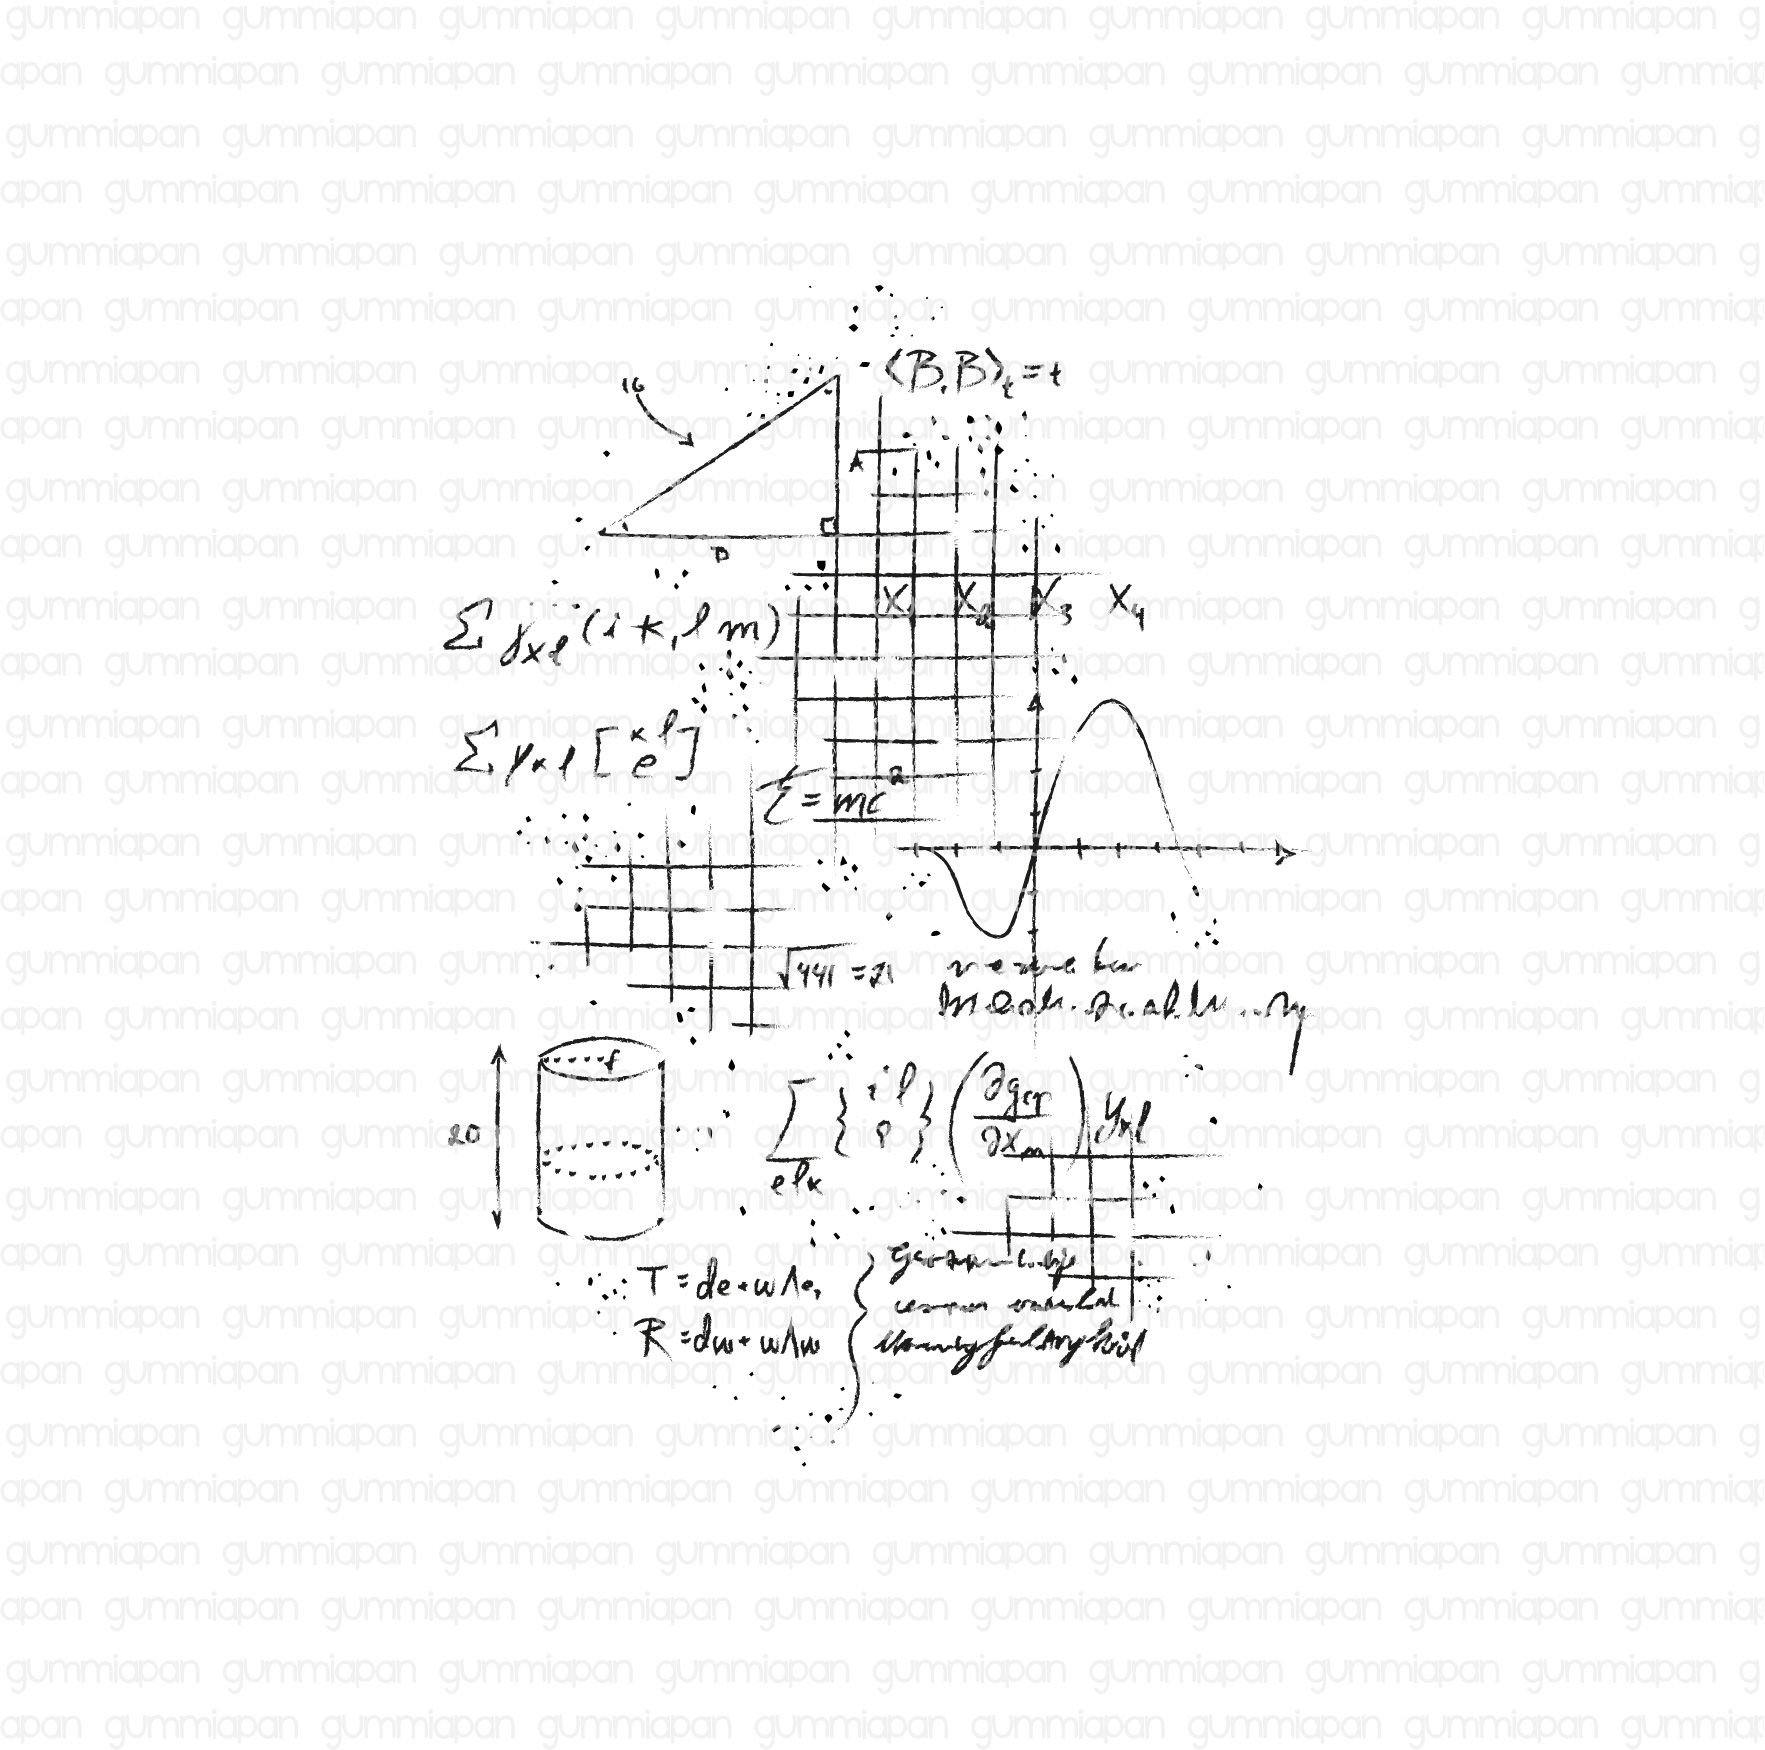 Gummiapan - Background mathematics